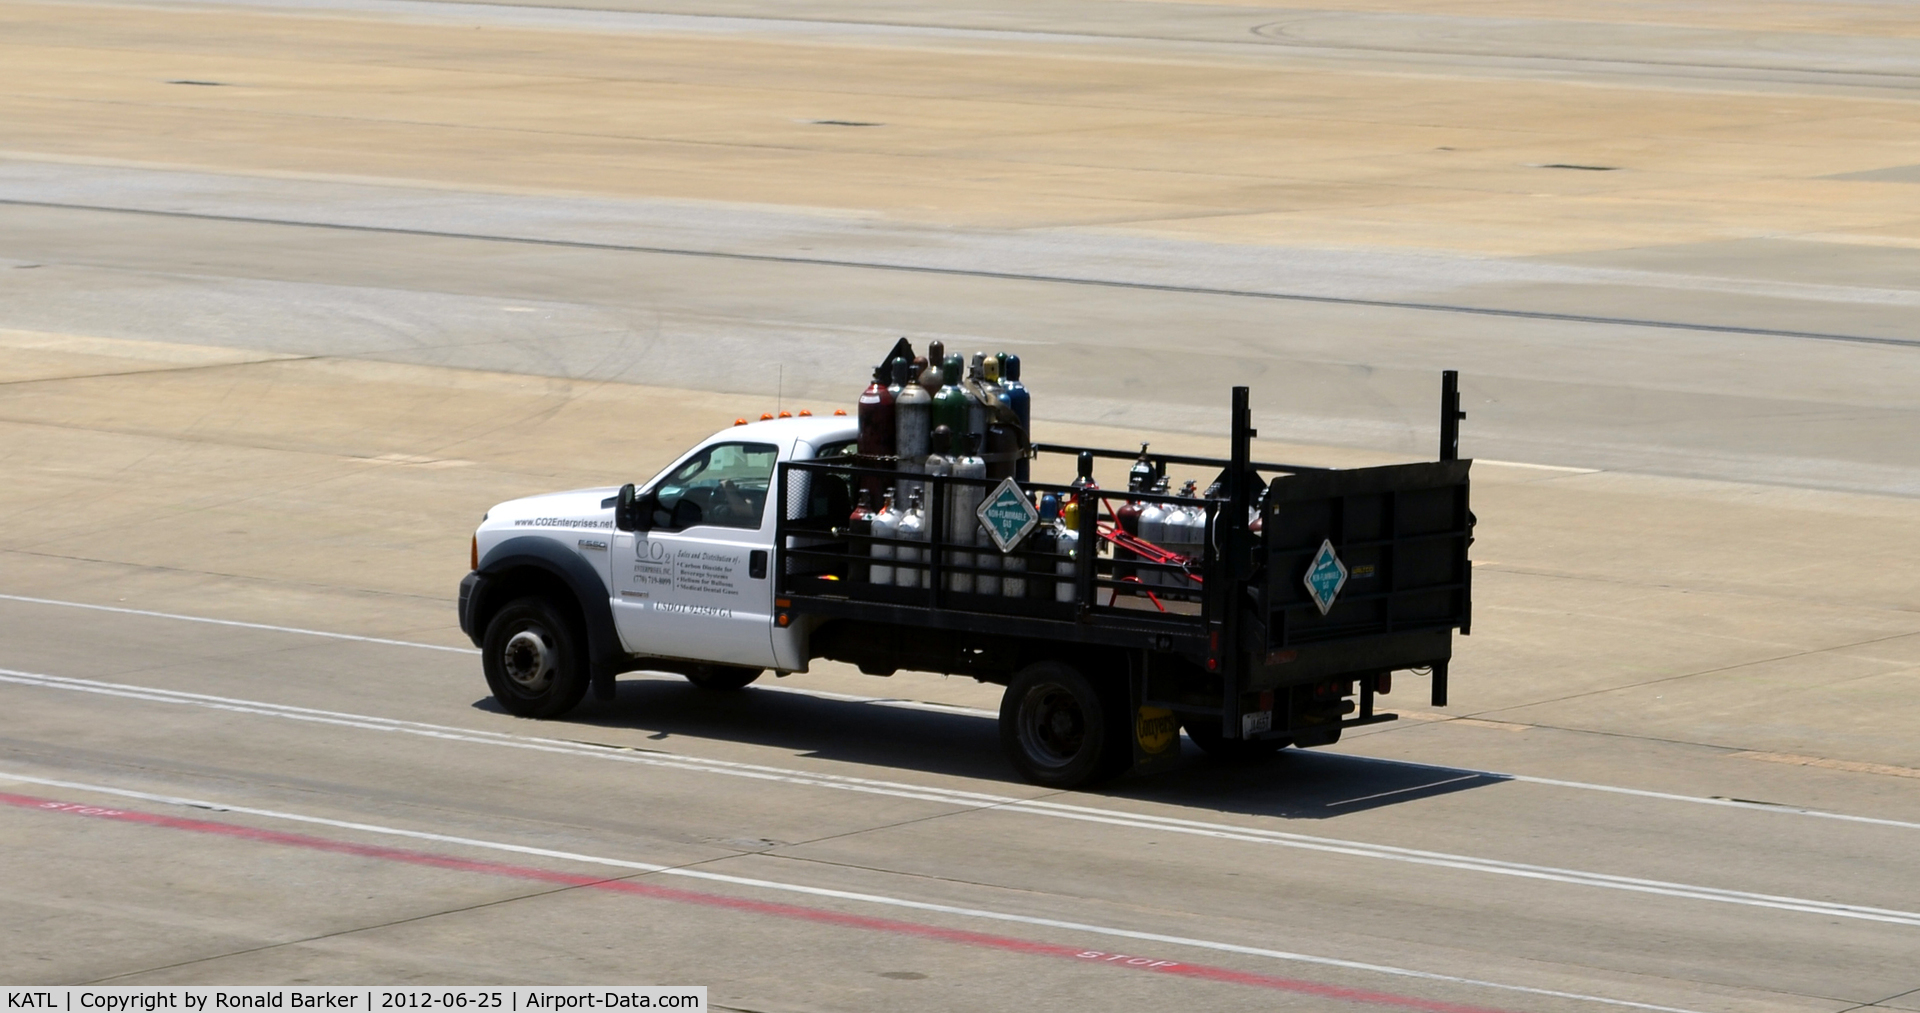 Hartsfield - Jackson Atlanta International Airport (ATL) - 
Truck with bottled gas